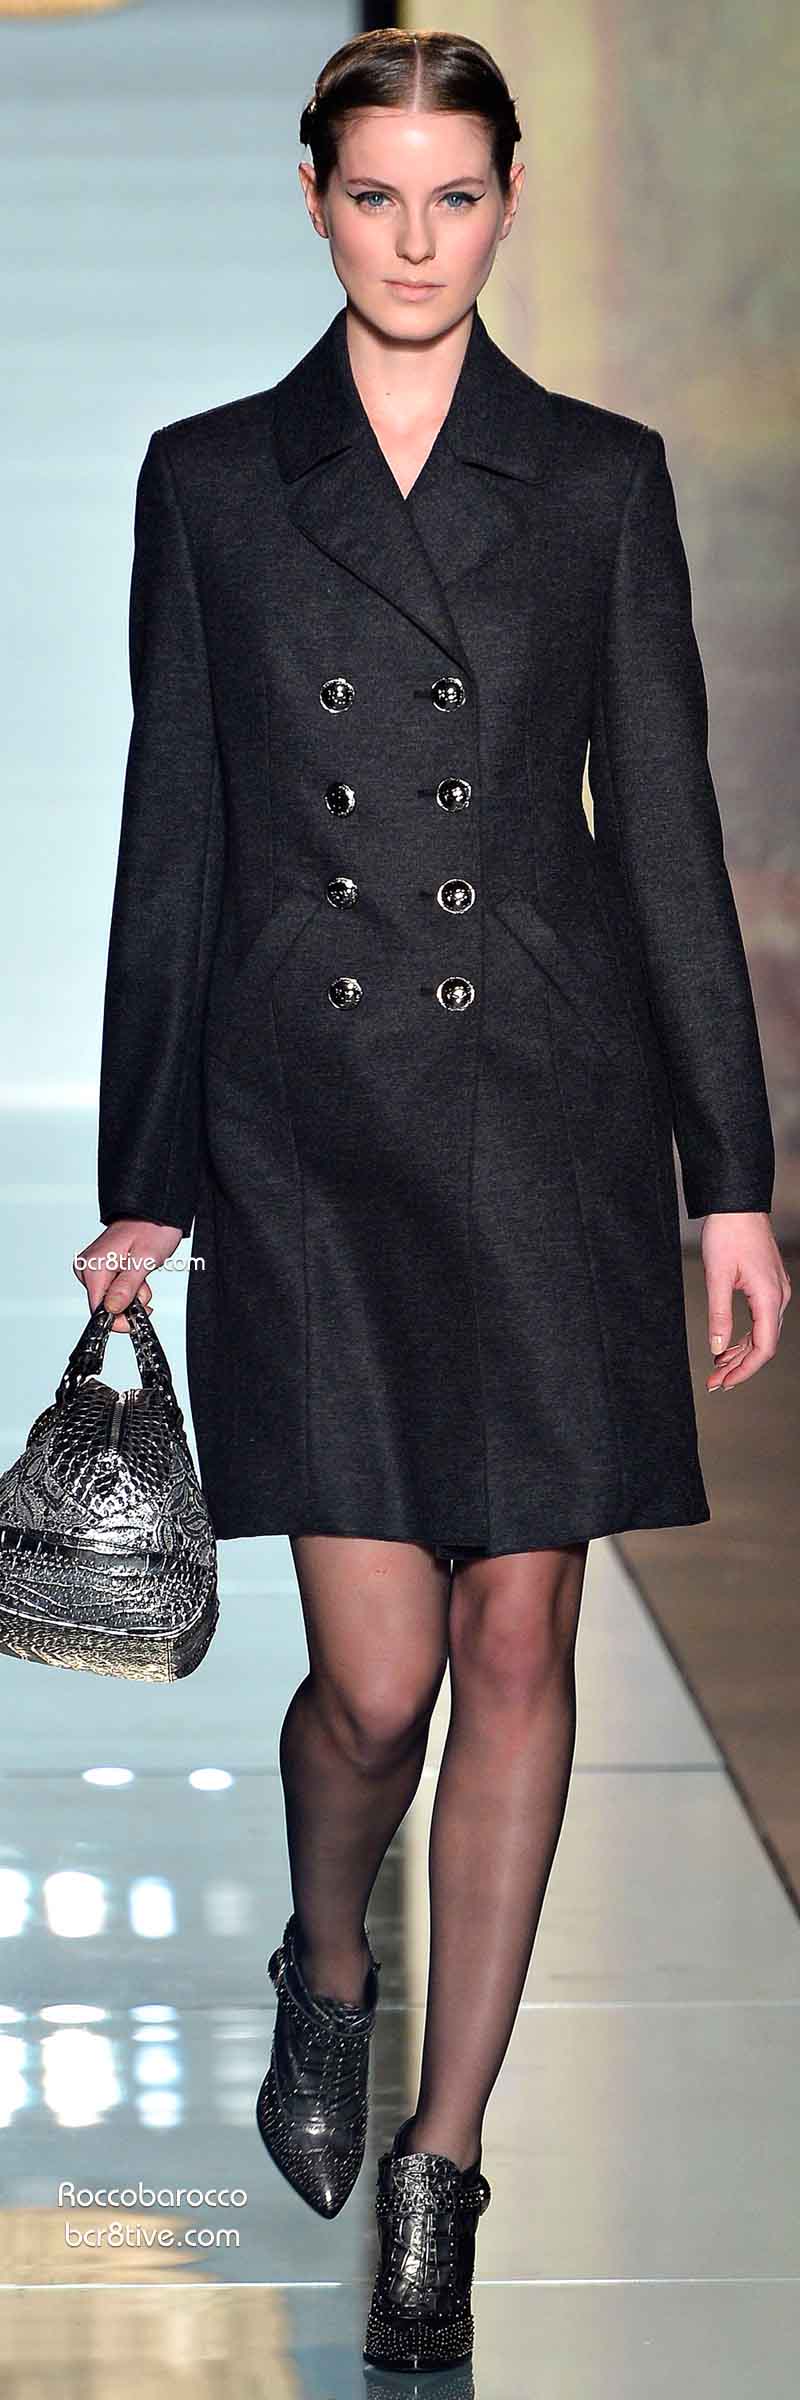 Fall 2014 Menswear Inspired Fashion - Roccobarocco